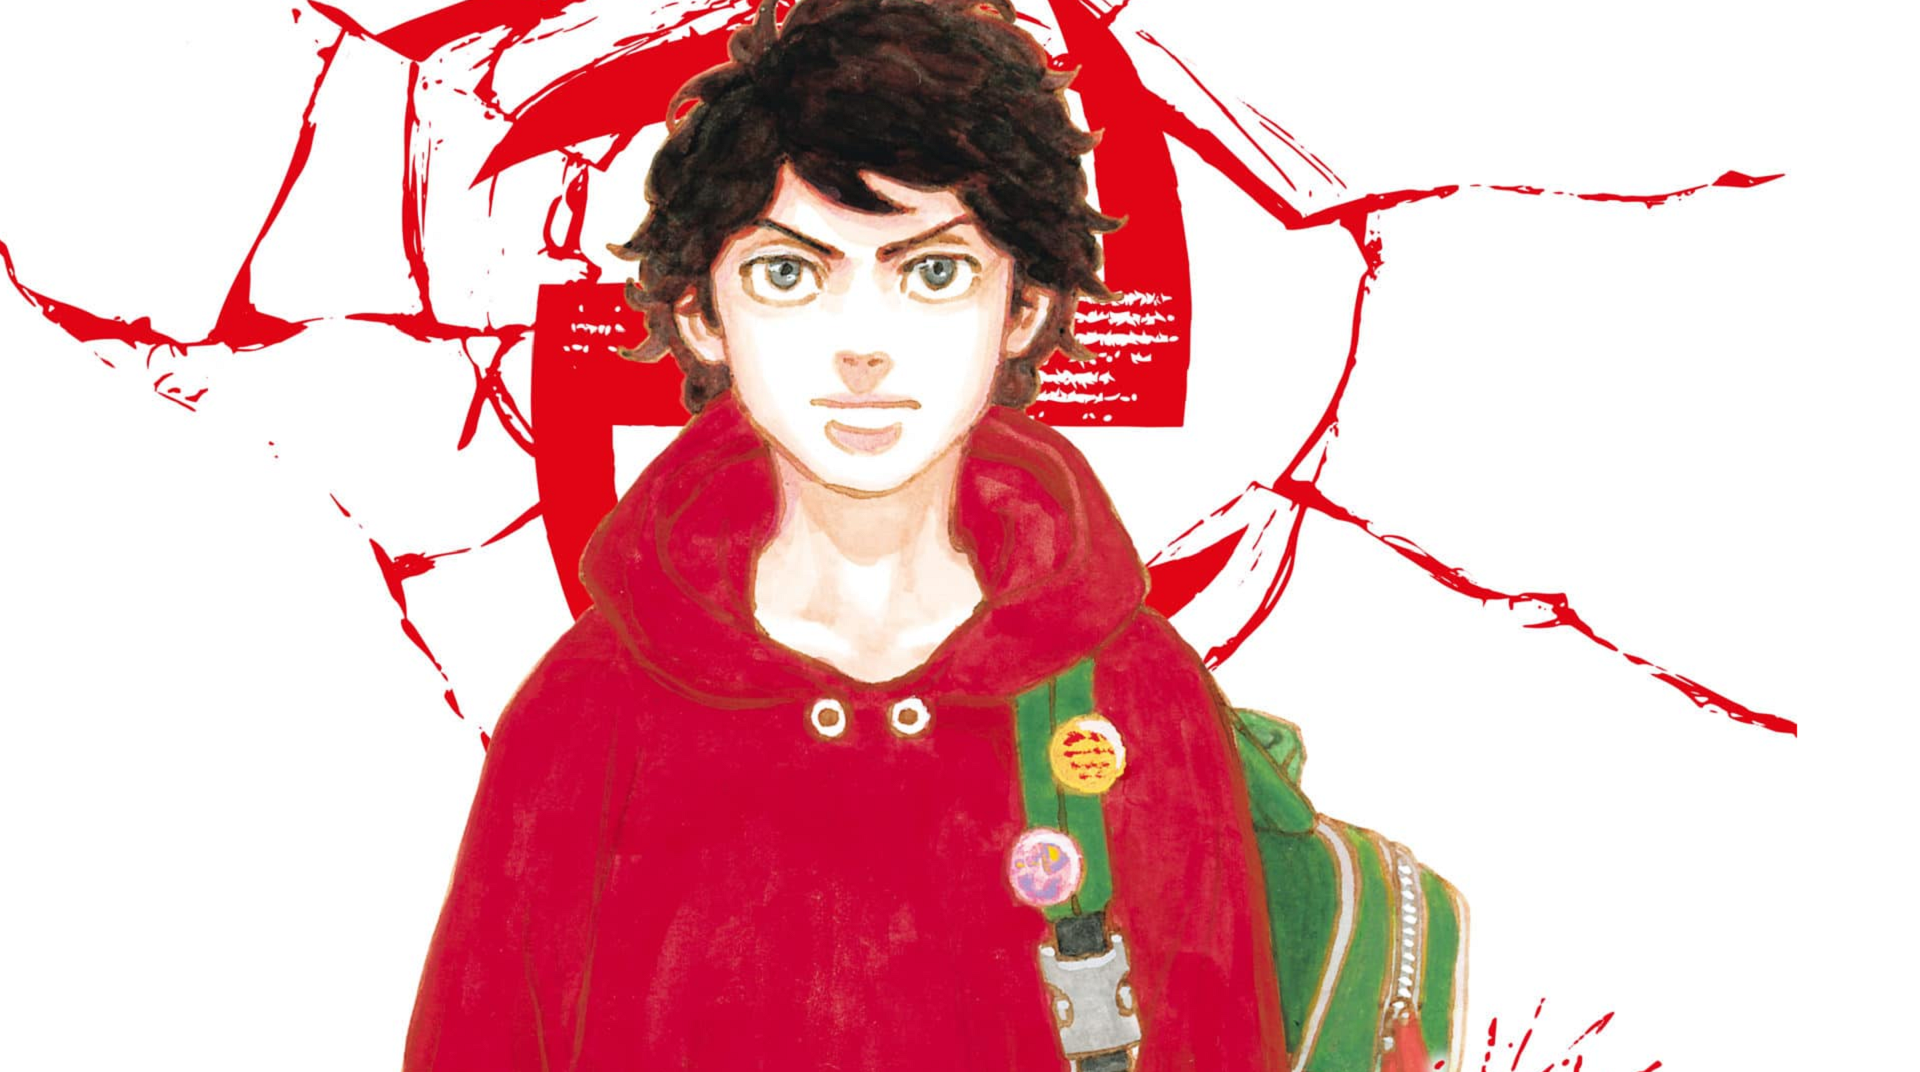 Tokyo Revengers Manga Final Arc - cover of the 1st volume